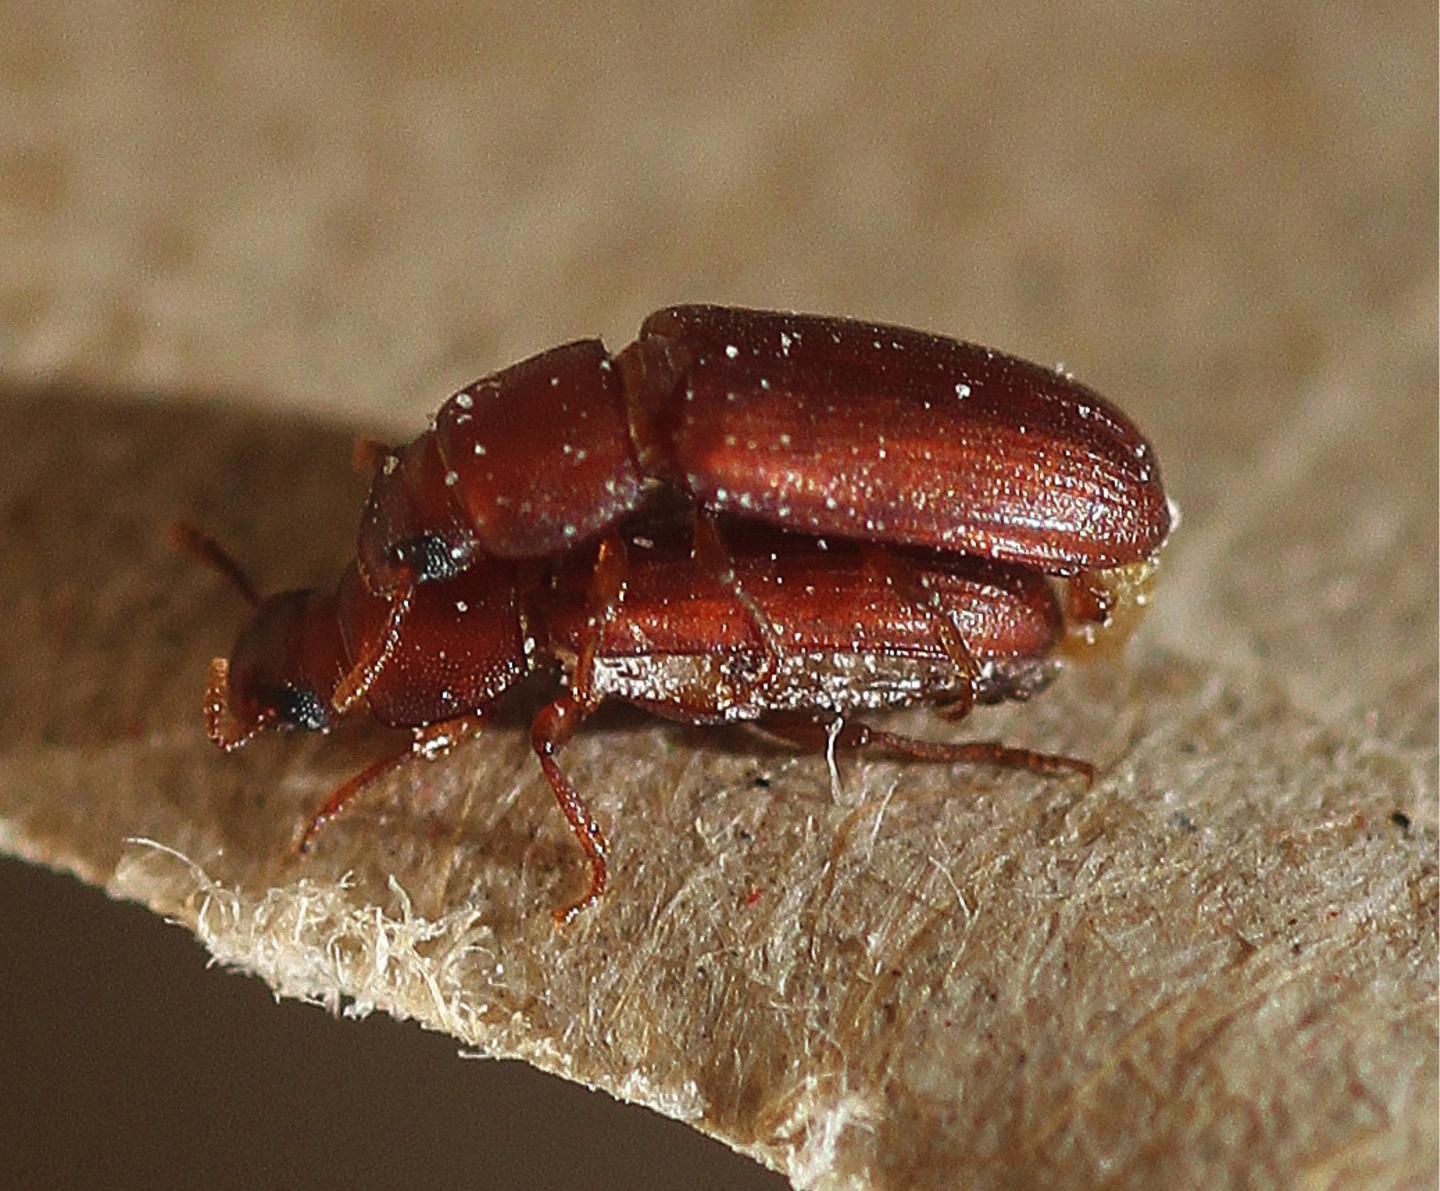 Red Flour Beetles Mating